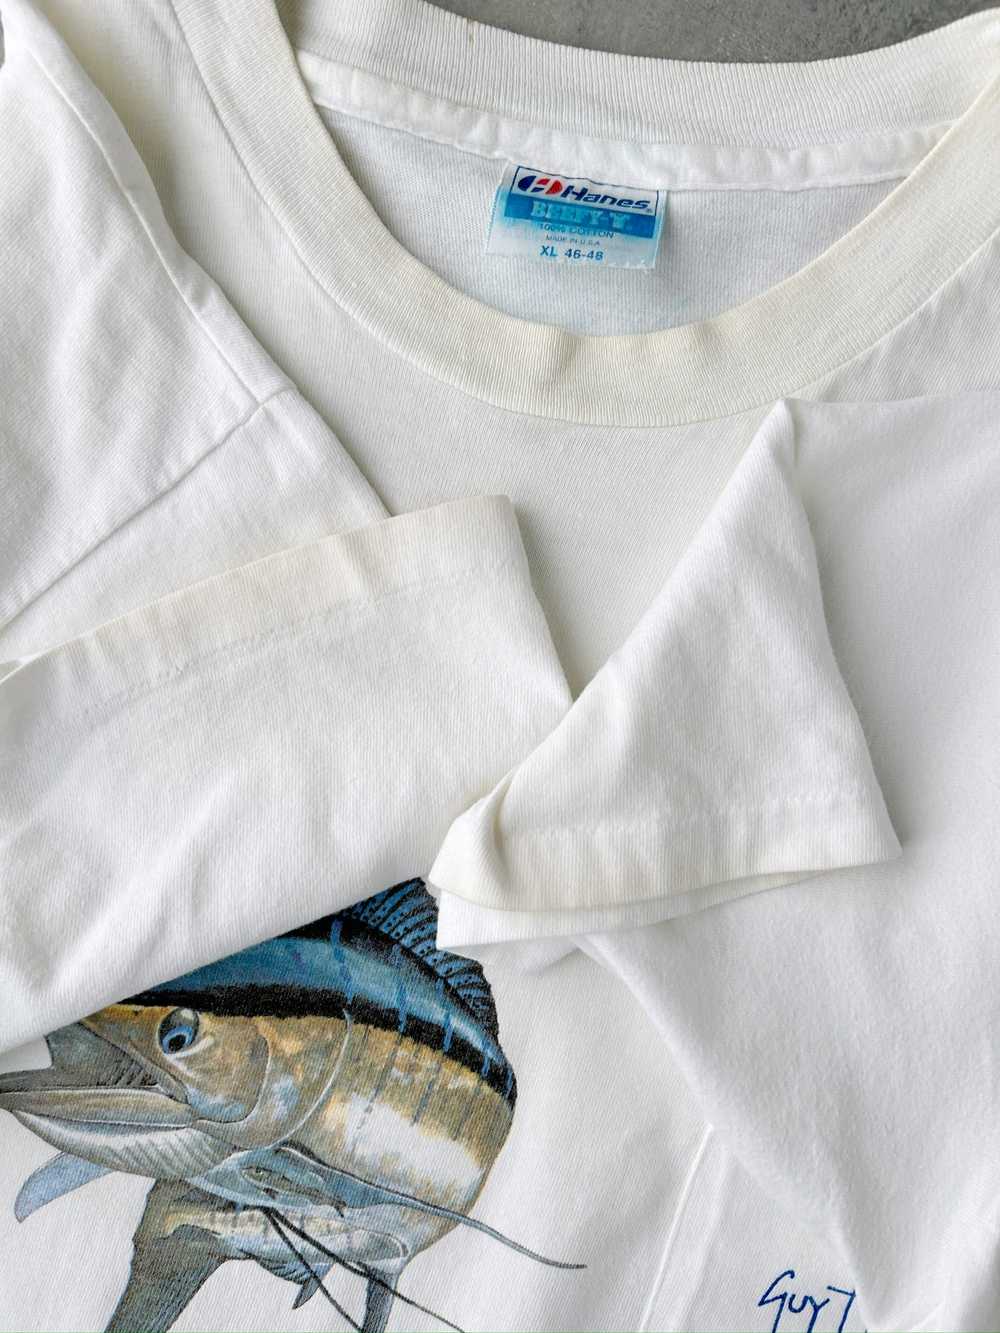 Guy Harvey Pocket T-Shirt '80's - XL - image 4